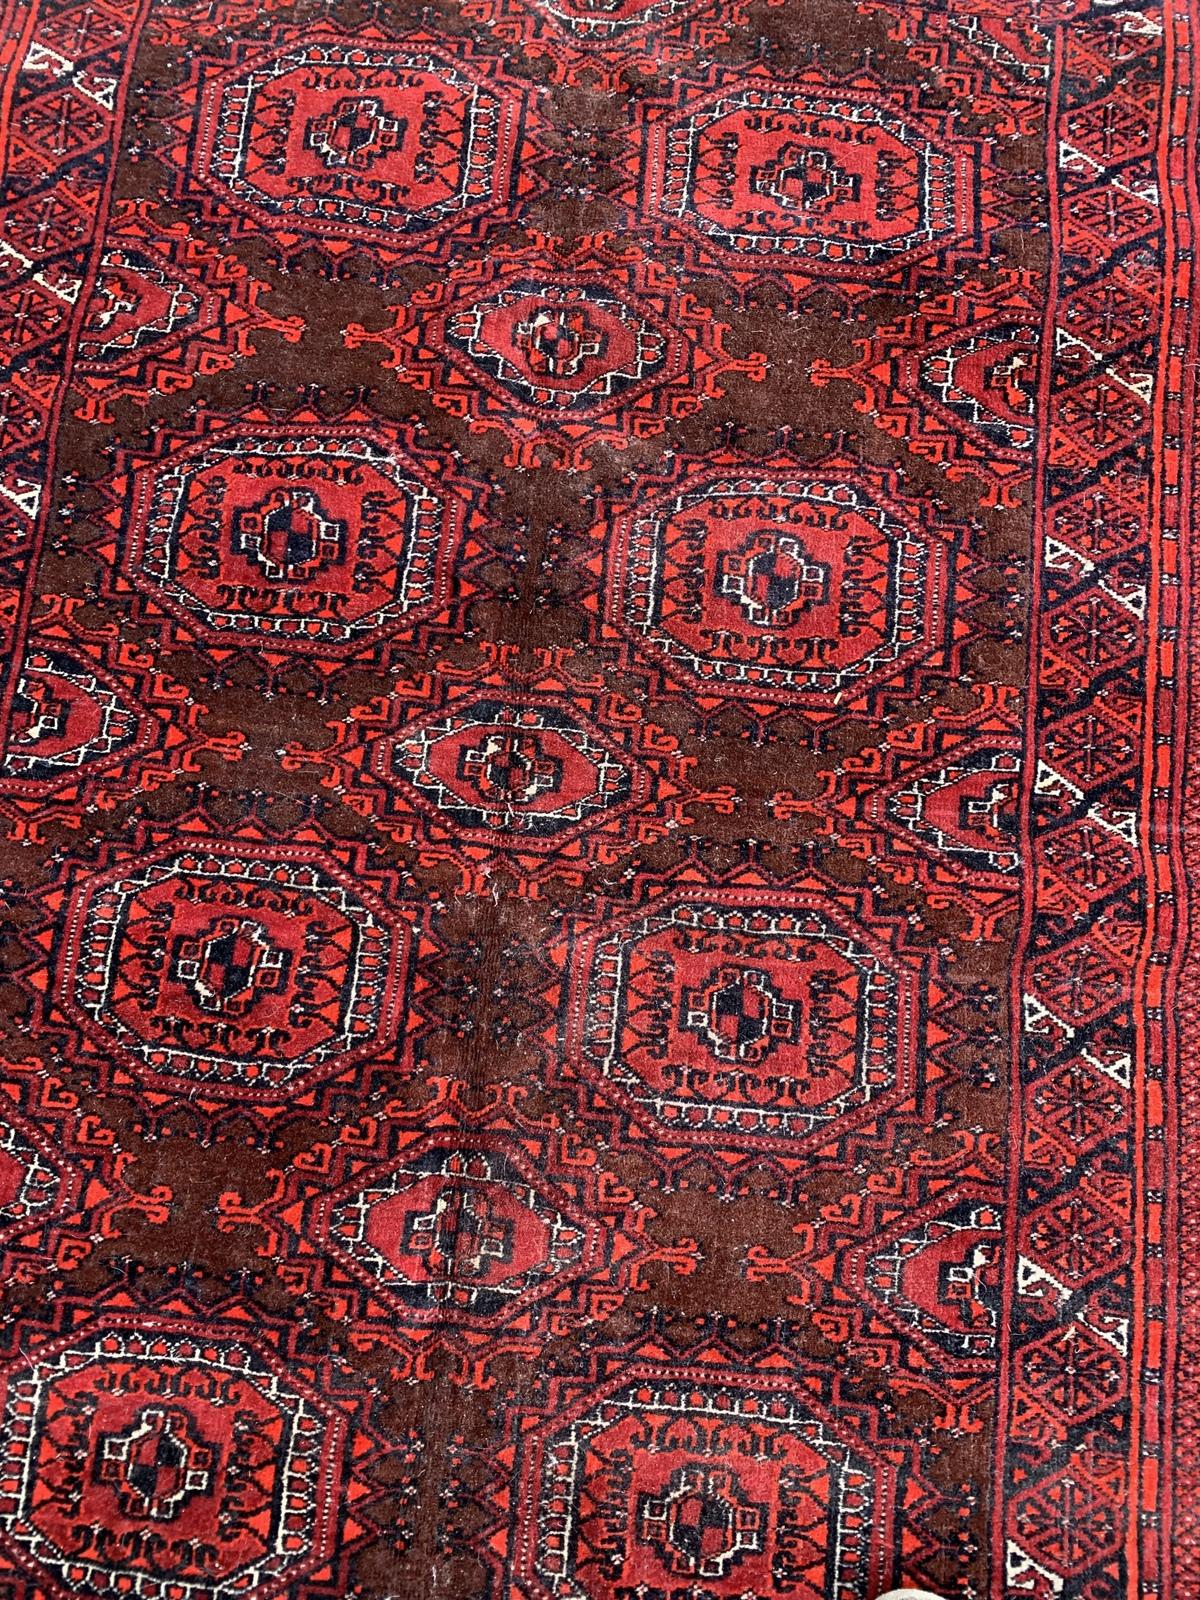 Wool Handmade Vintage Uzbek Bukhara Rug 4.5' x 5.10, 1960s - 1B963 For Sale